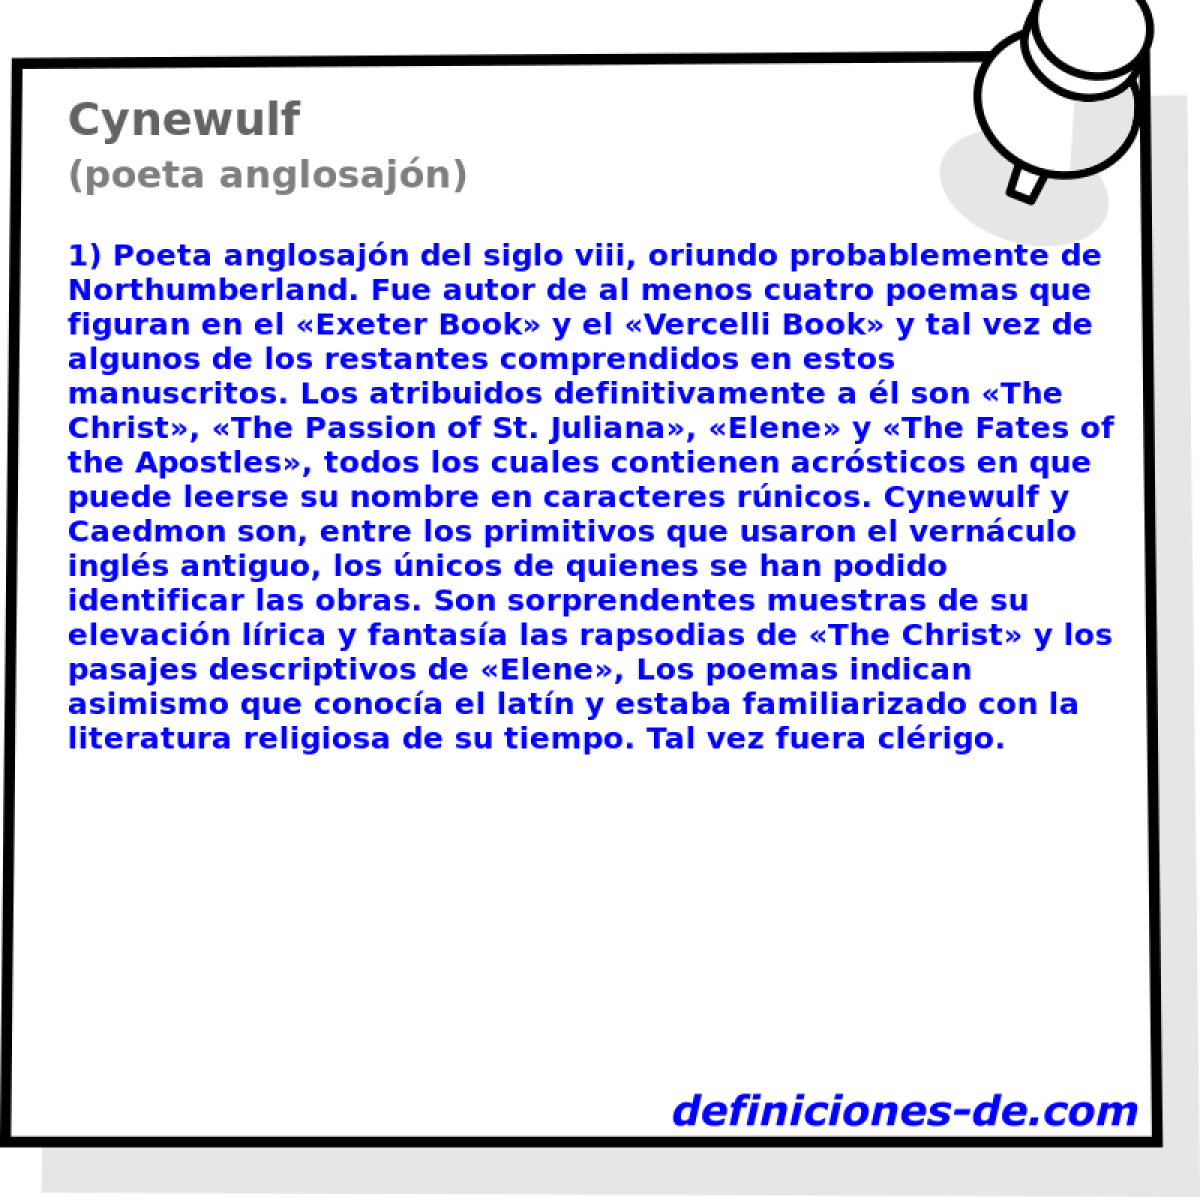 Cynewulf (poeta anglosajn)